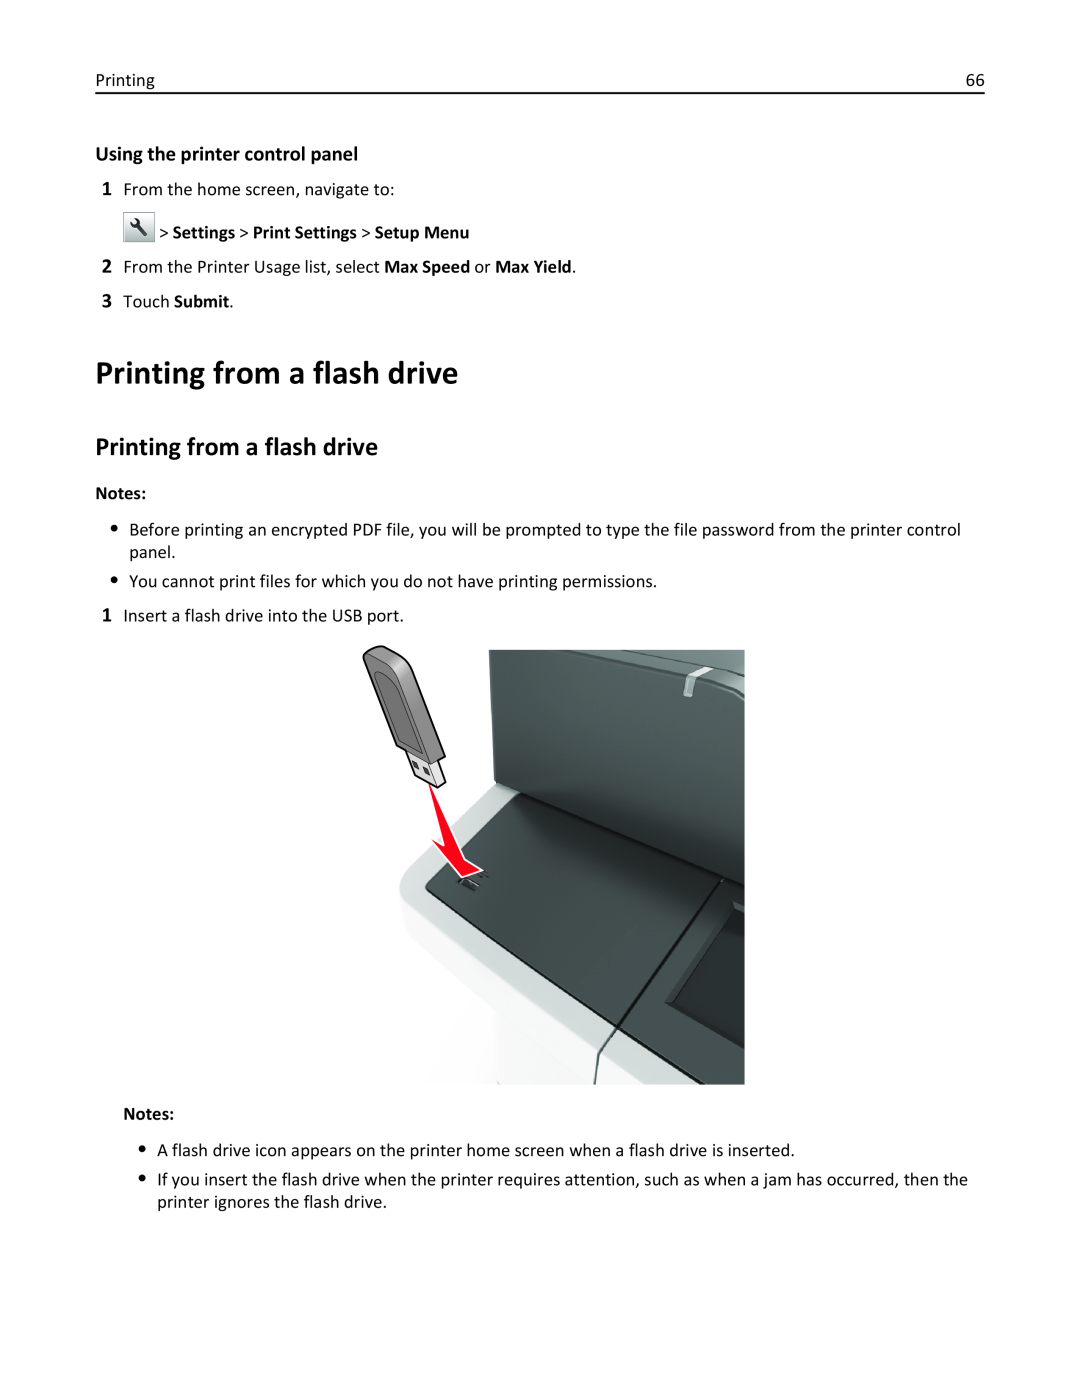 Lexmark 436 manual Printing from a flash drive, Using the printer control panel, Settings Print Settings Setup Menu 